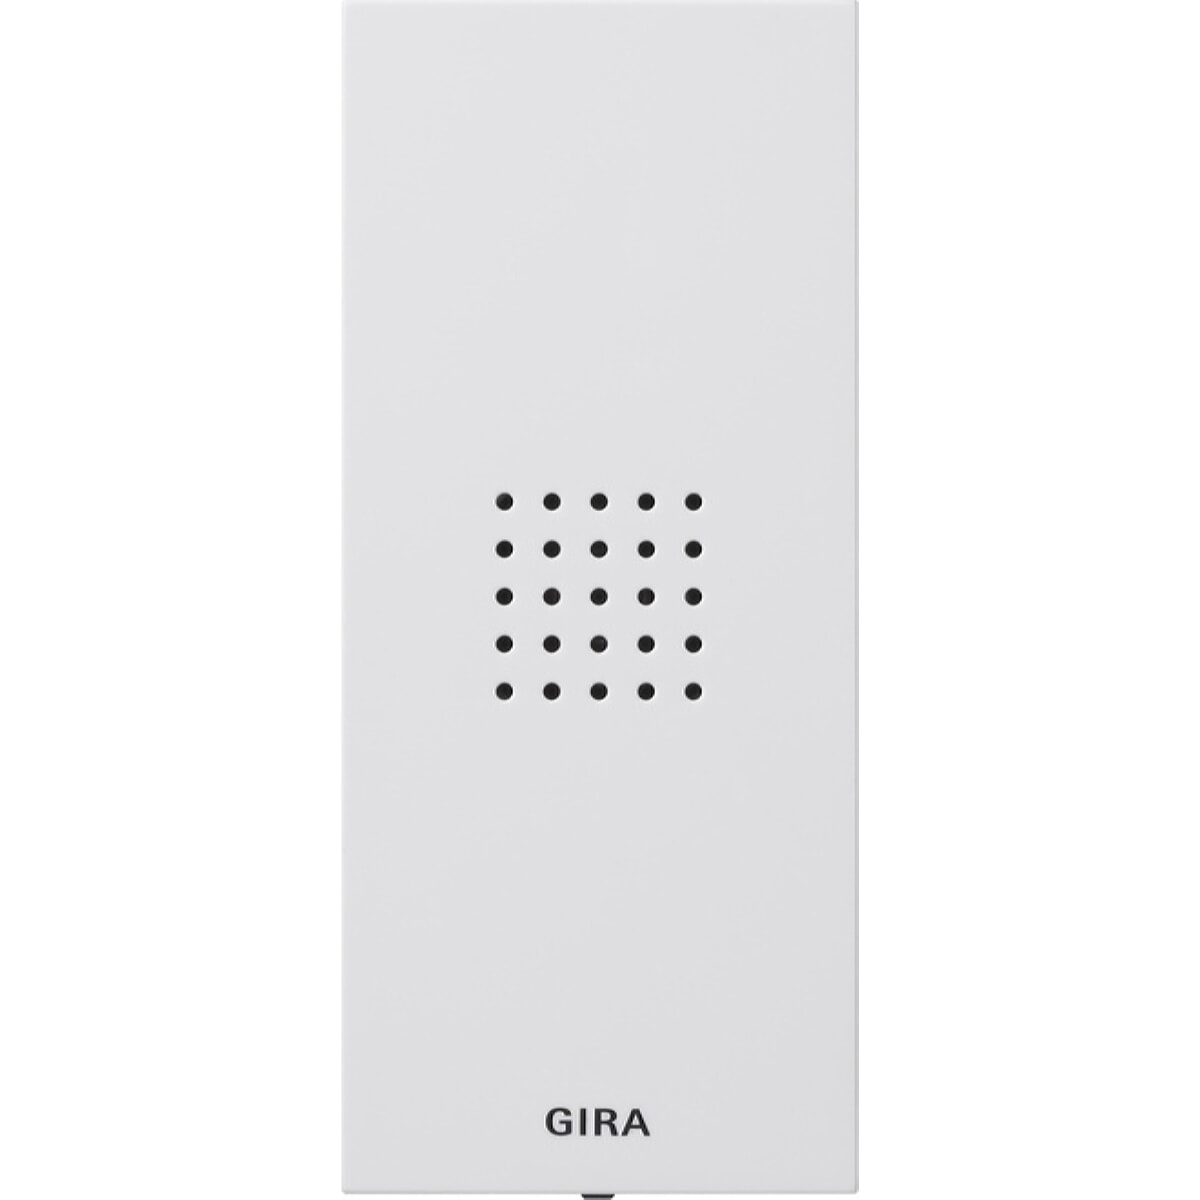 Gira Telefonhörer 141803 System 55 reinweiss